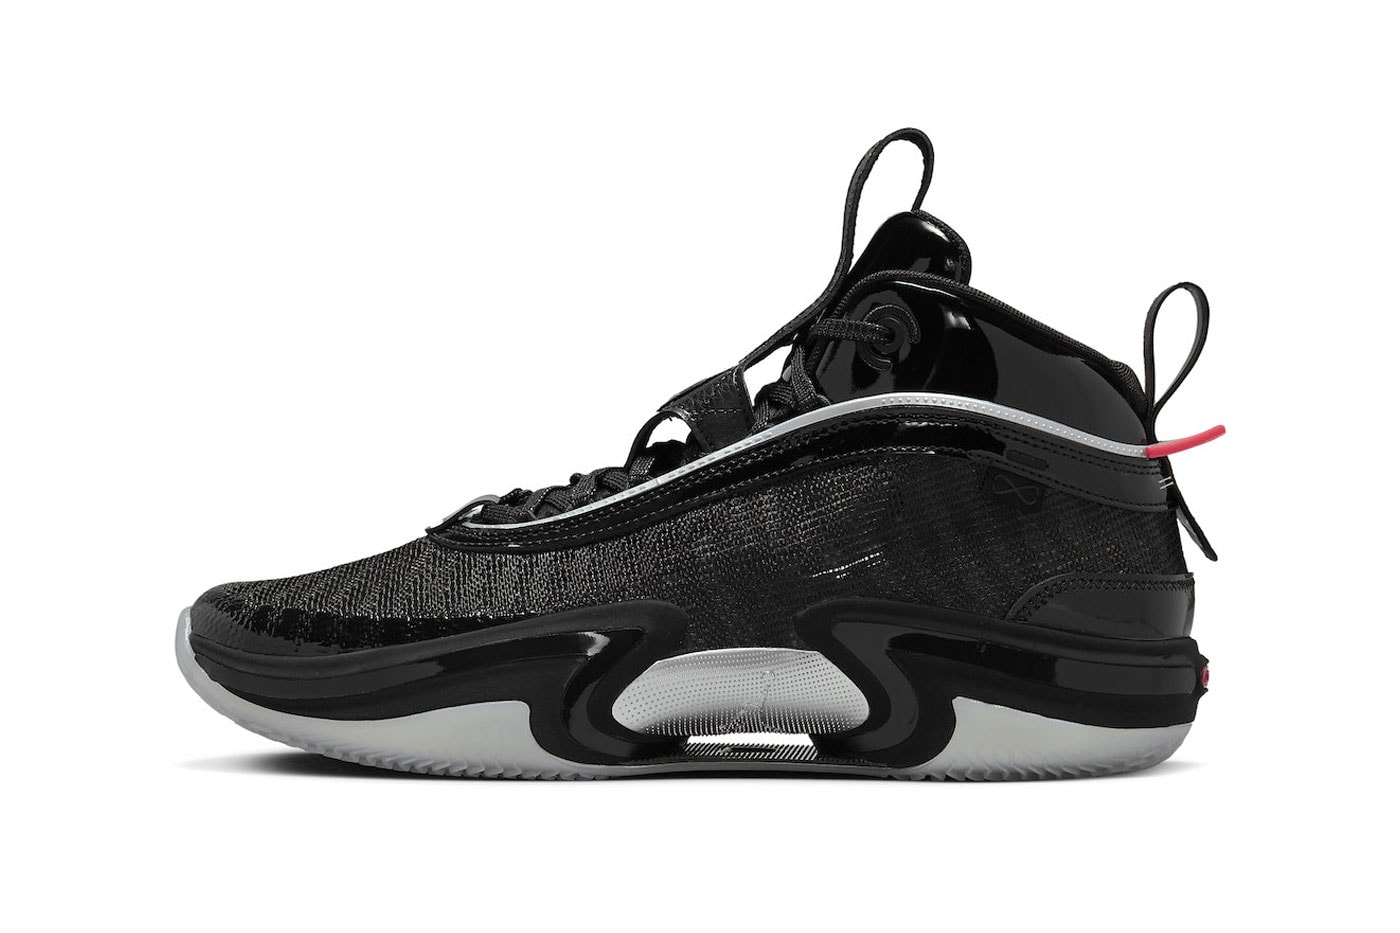 A closer look at Jayson Tatum's shoe deal with Air Jordan Brand